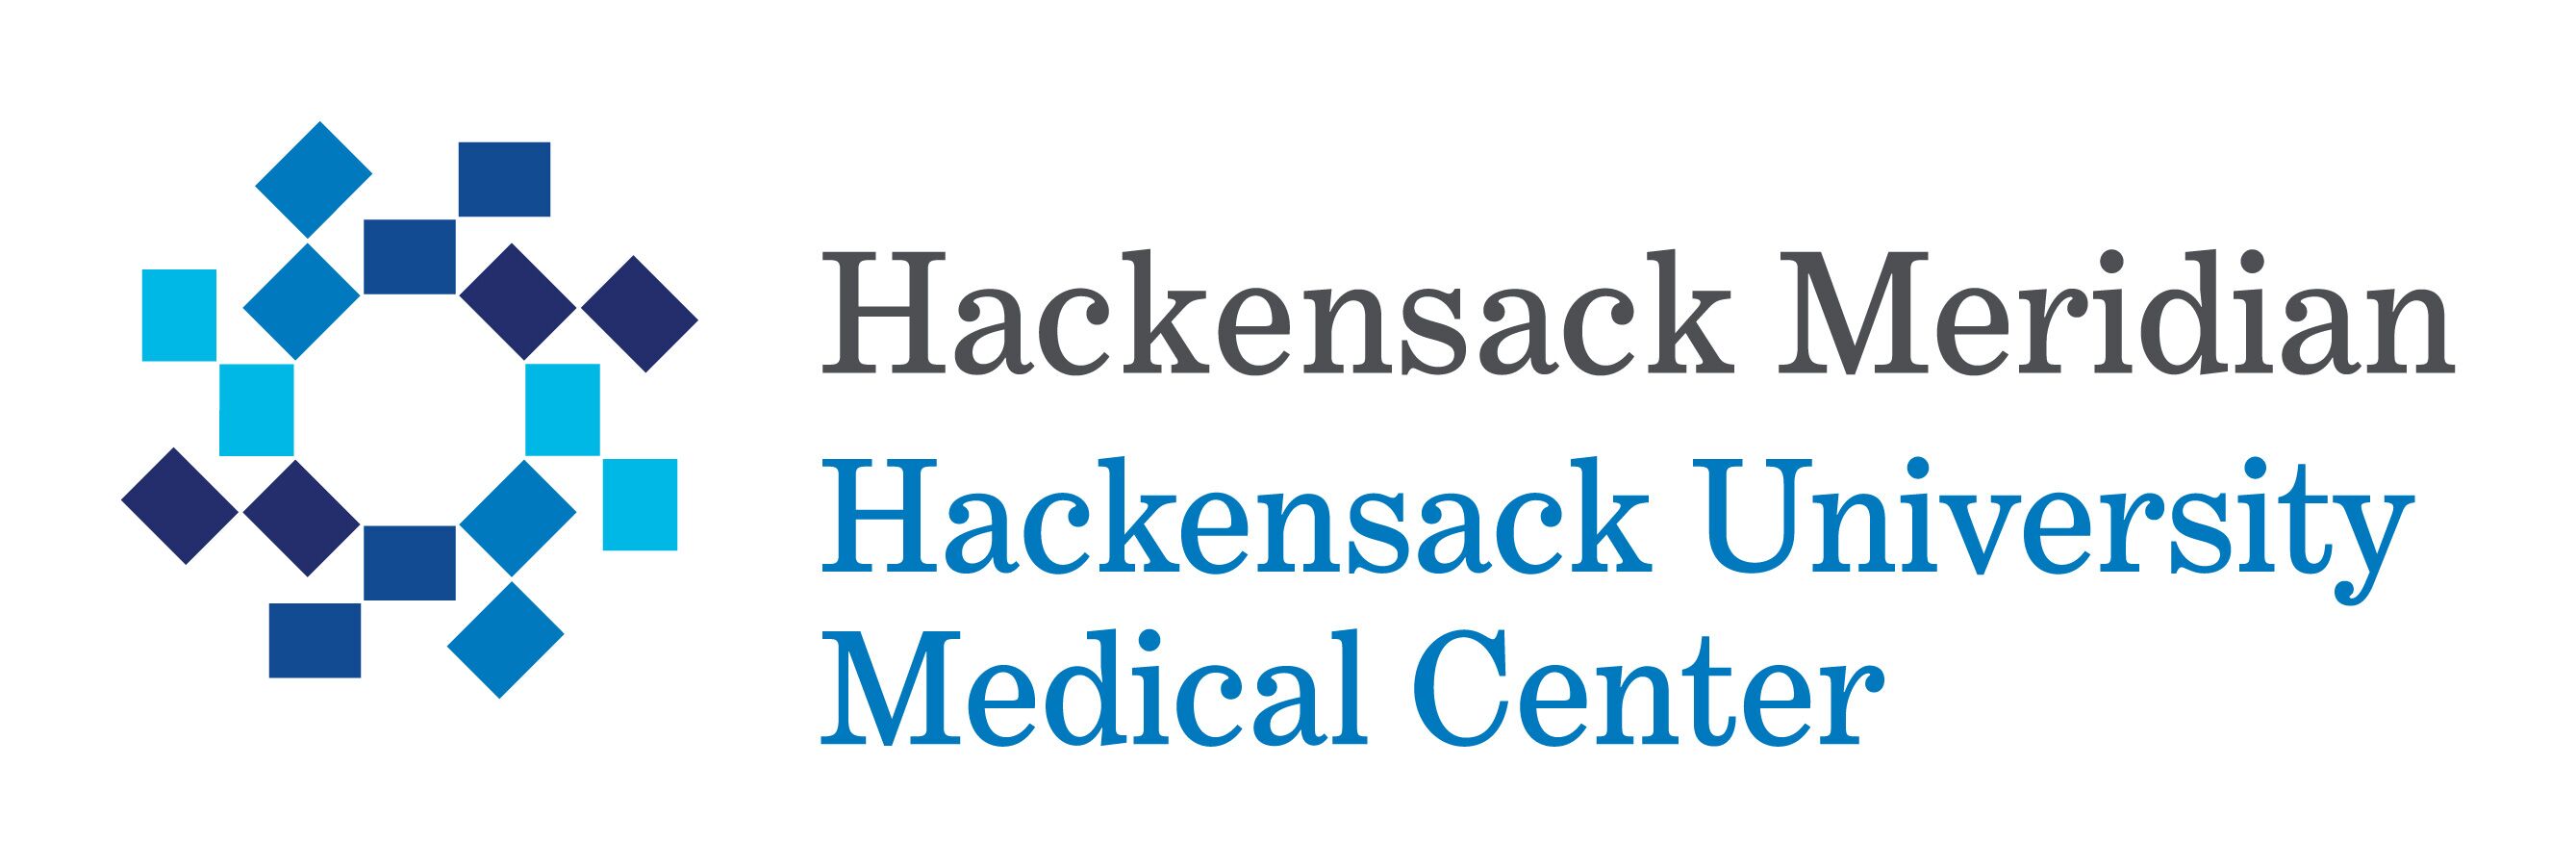 Hackensack University Medical Center
                  logo